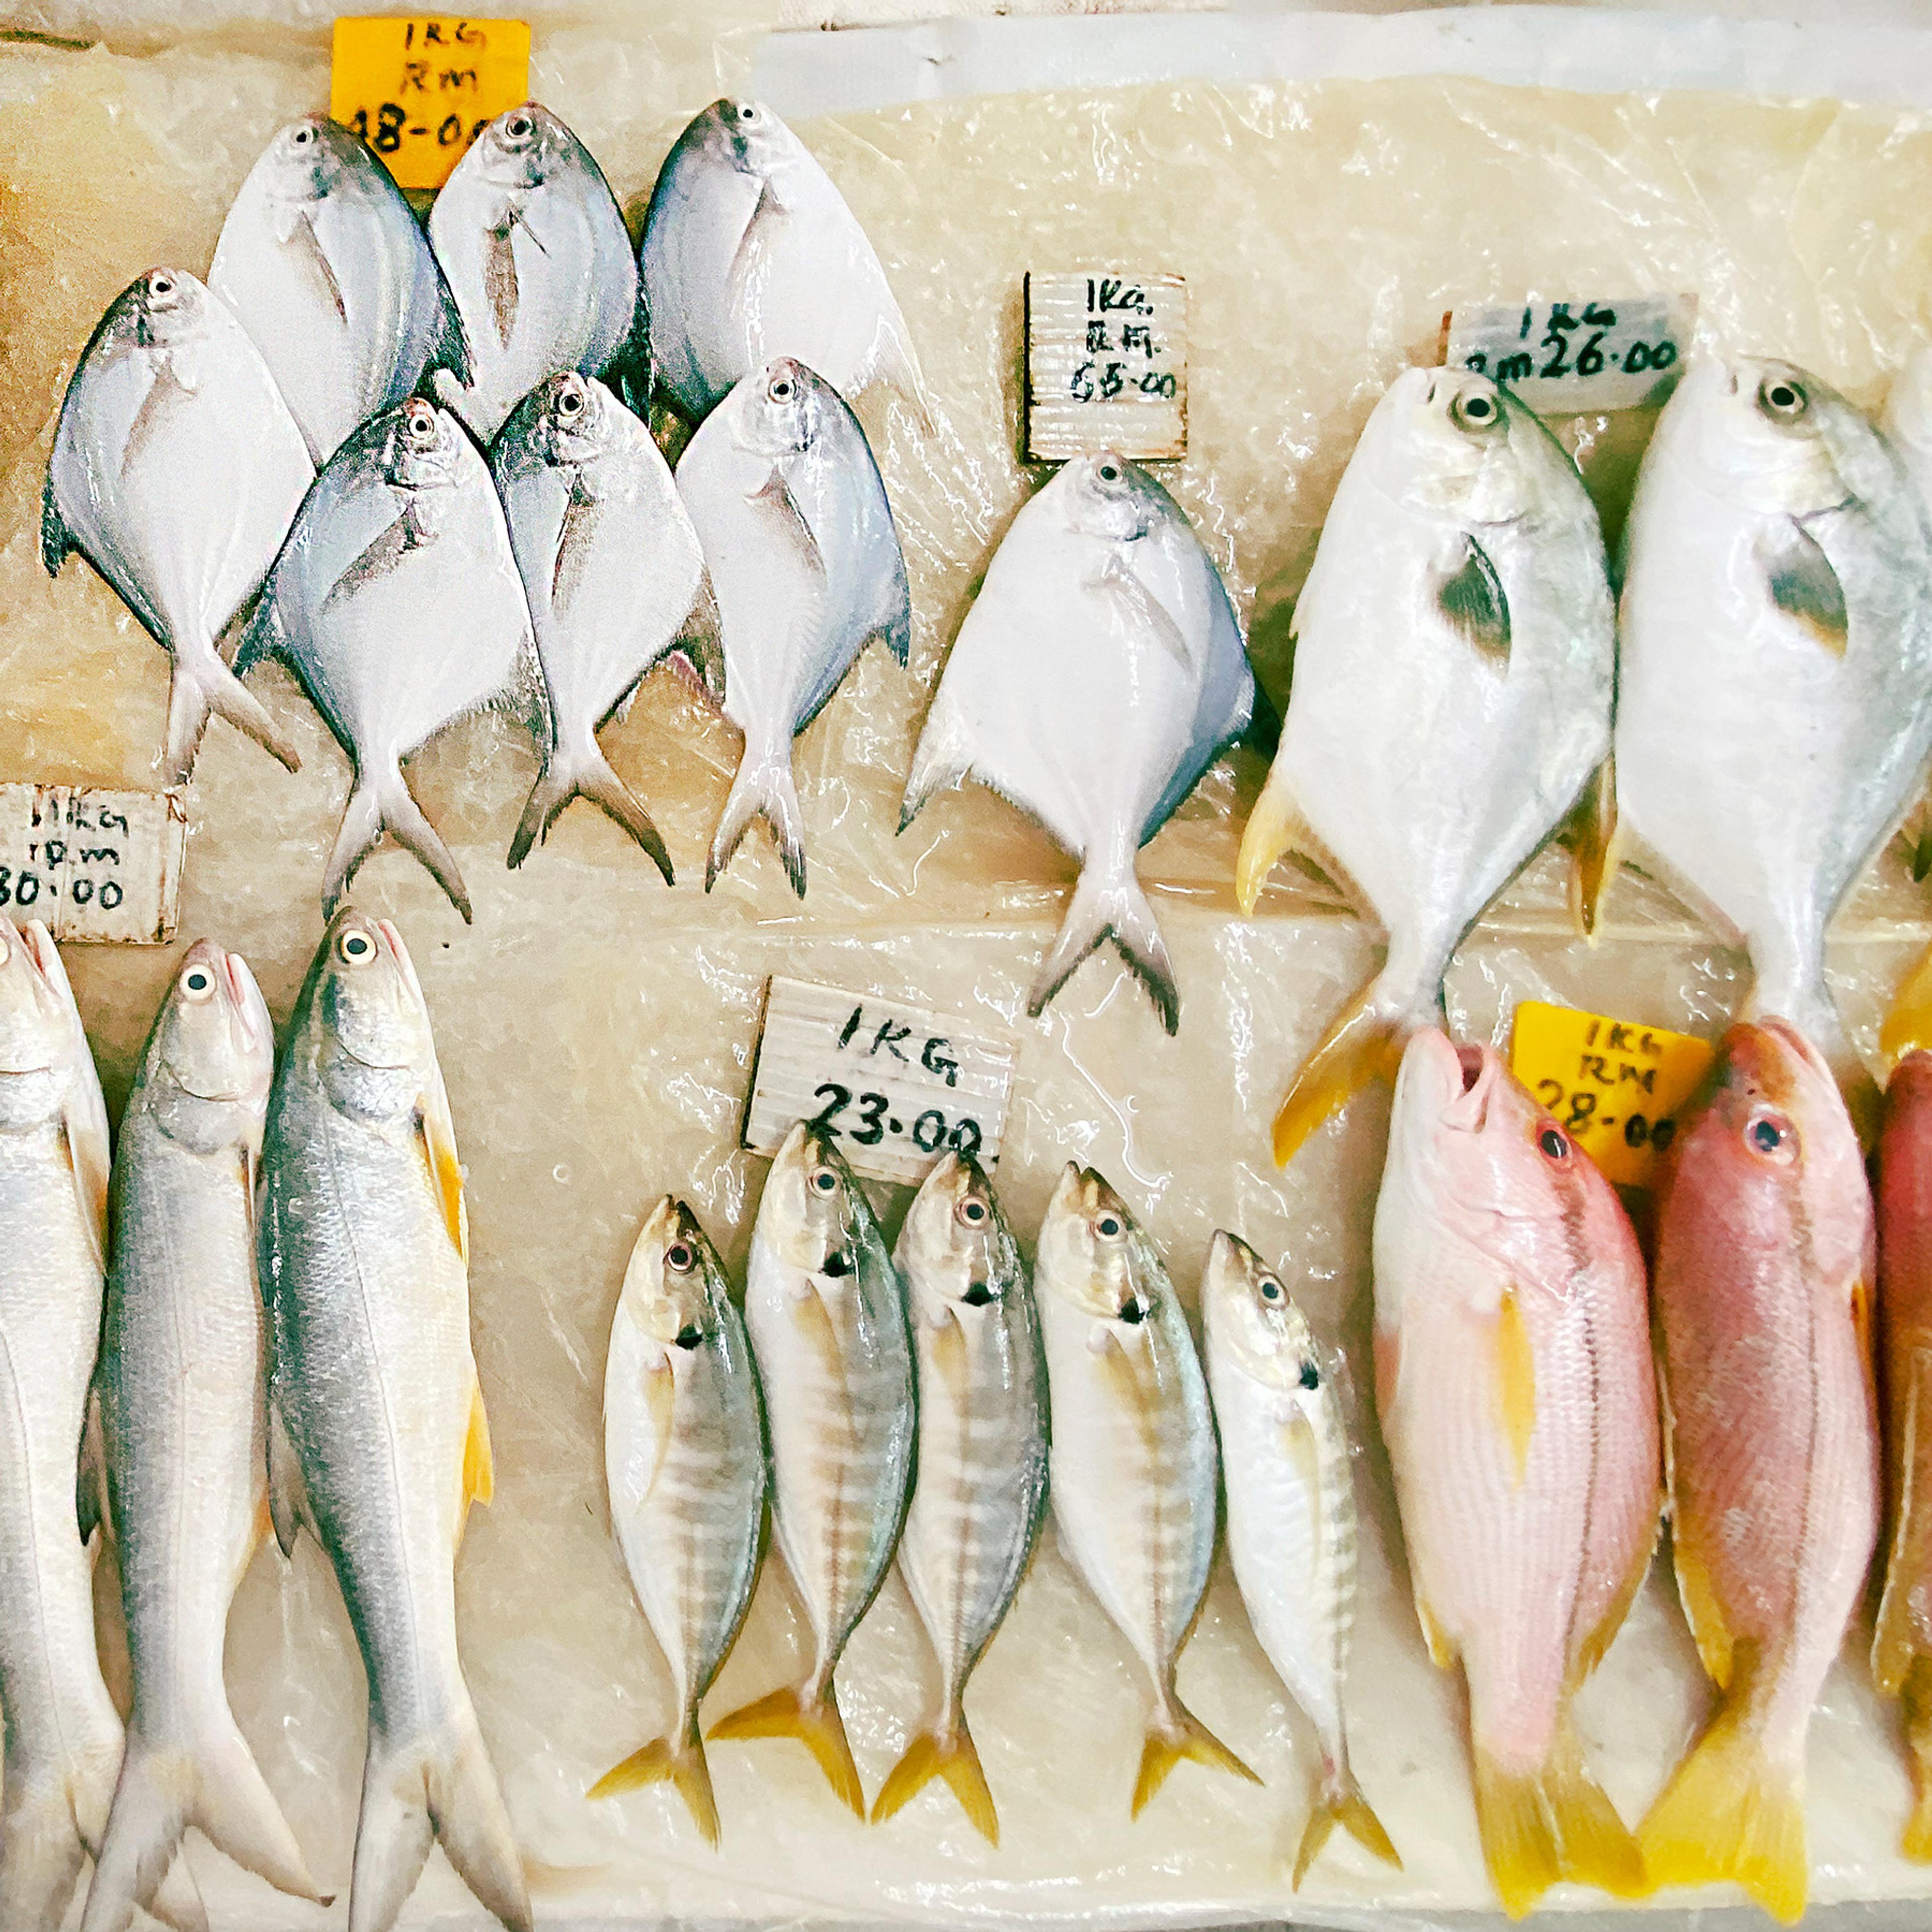 Various fish displayed in groupings at a fish market